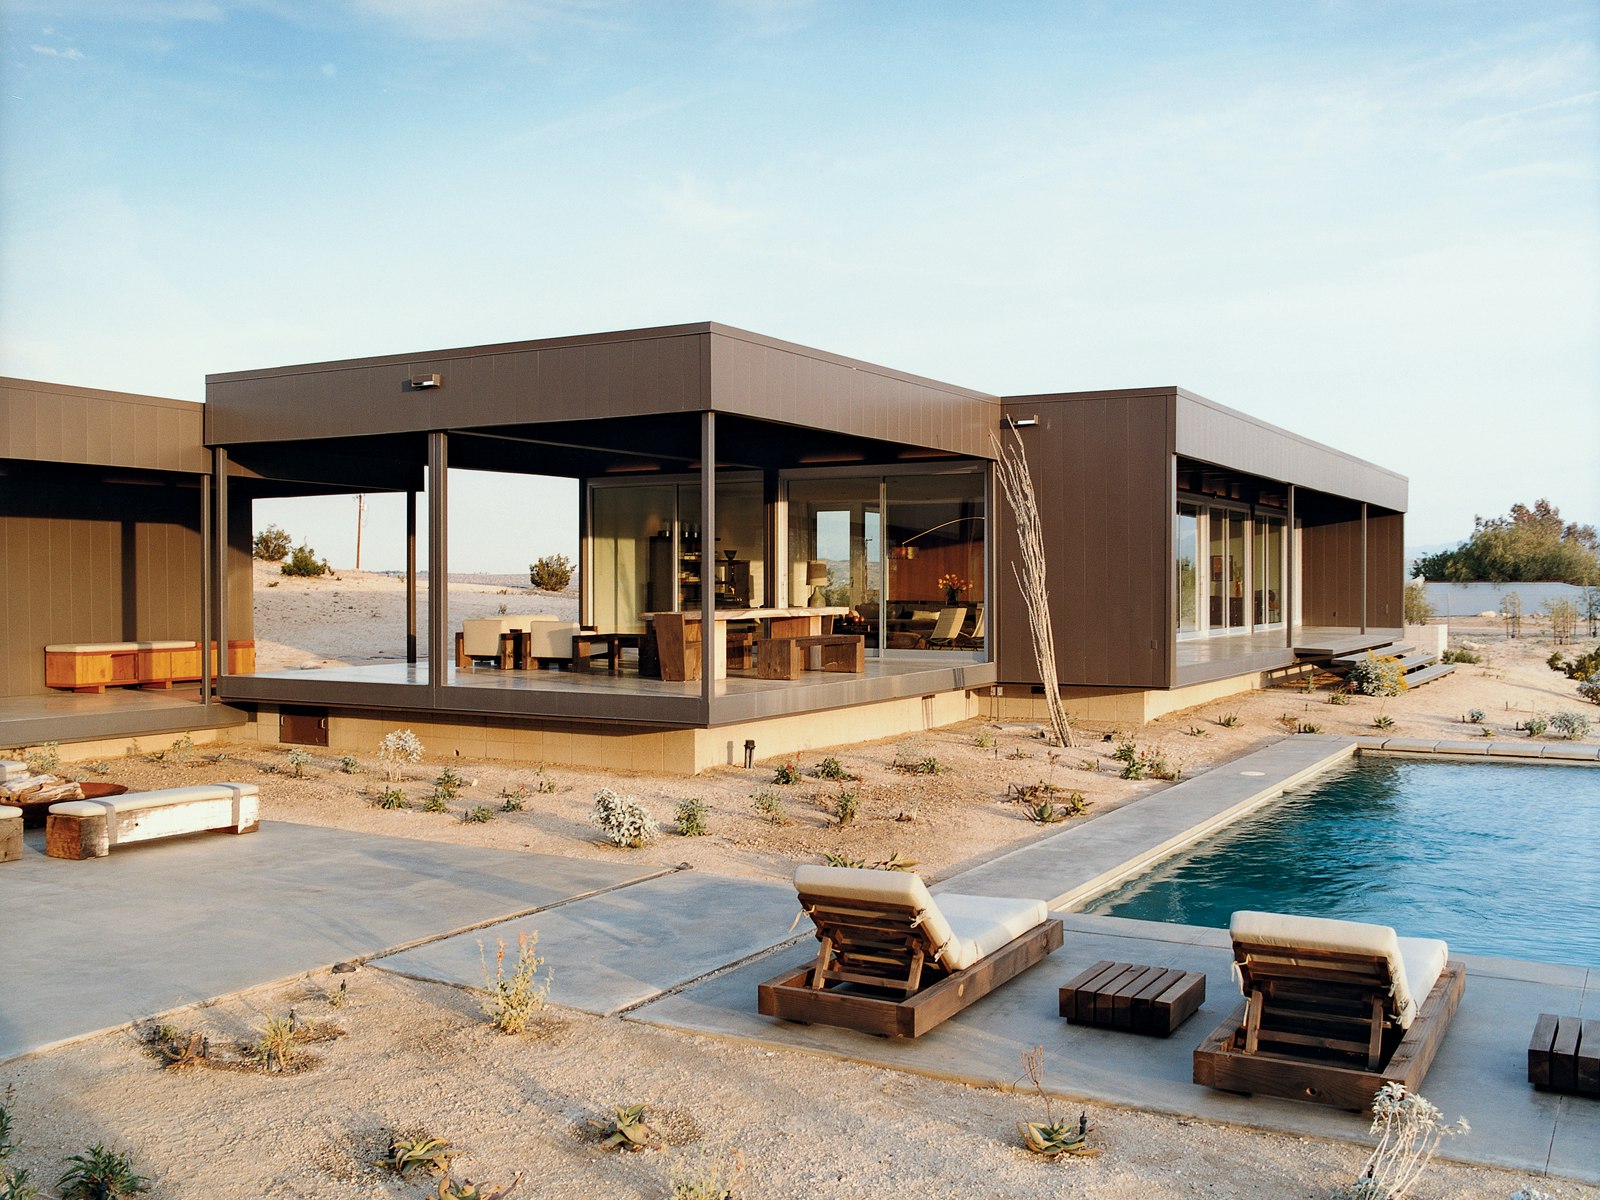 20 Desert Homes Dwell